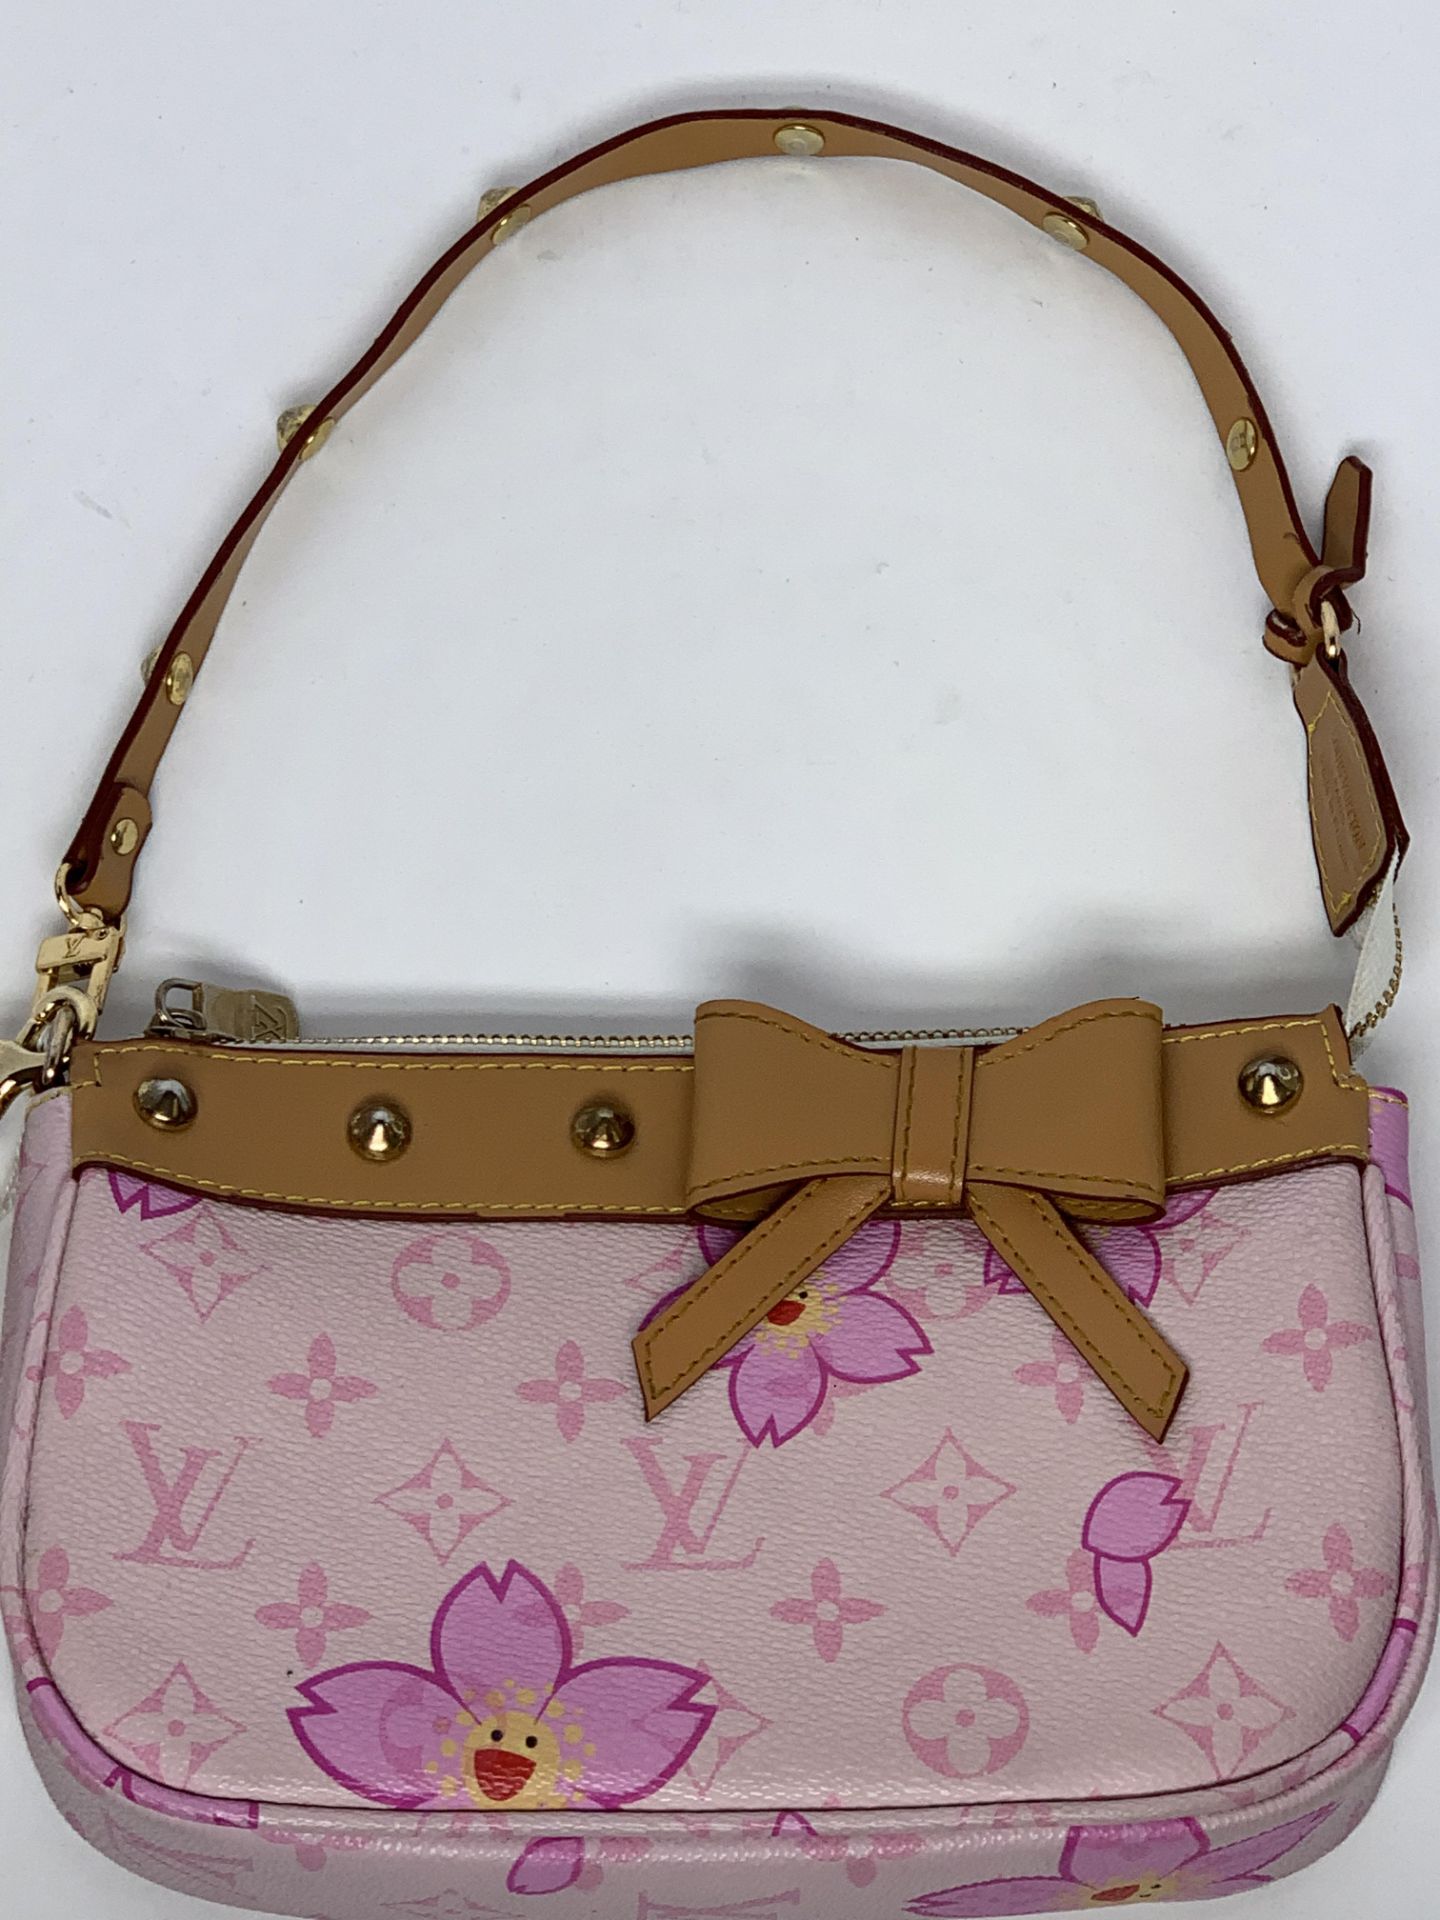 Louis Vuitton LV Luxury Shoulder Handbag Purse Clutch Wristlet, Pink, Flower Print, Interior Pocket - Image 2 of 6